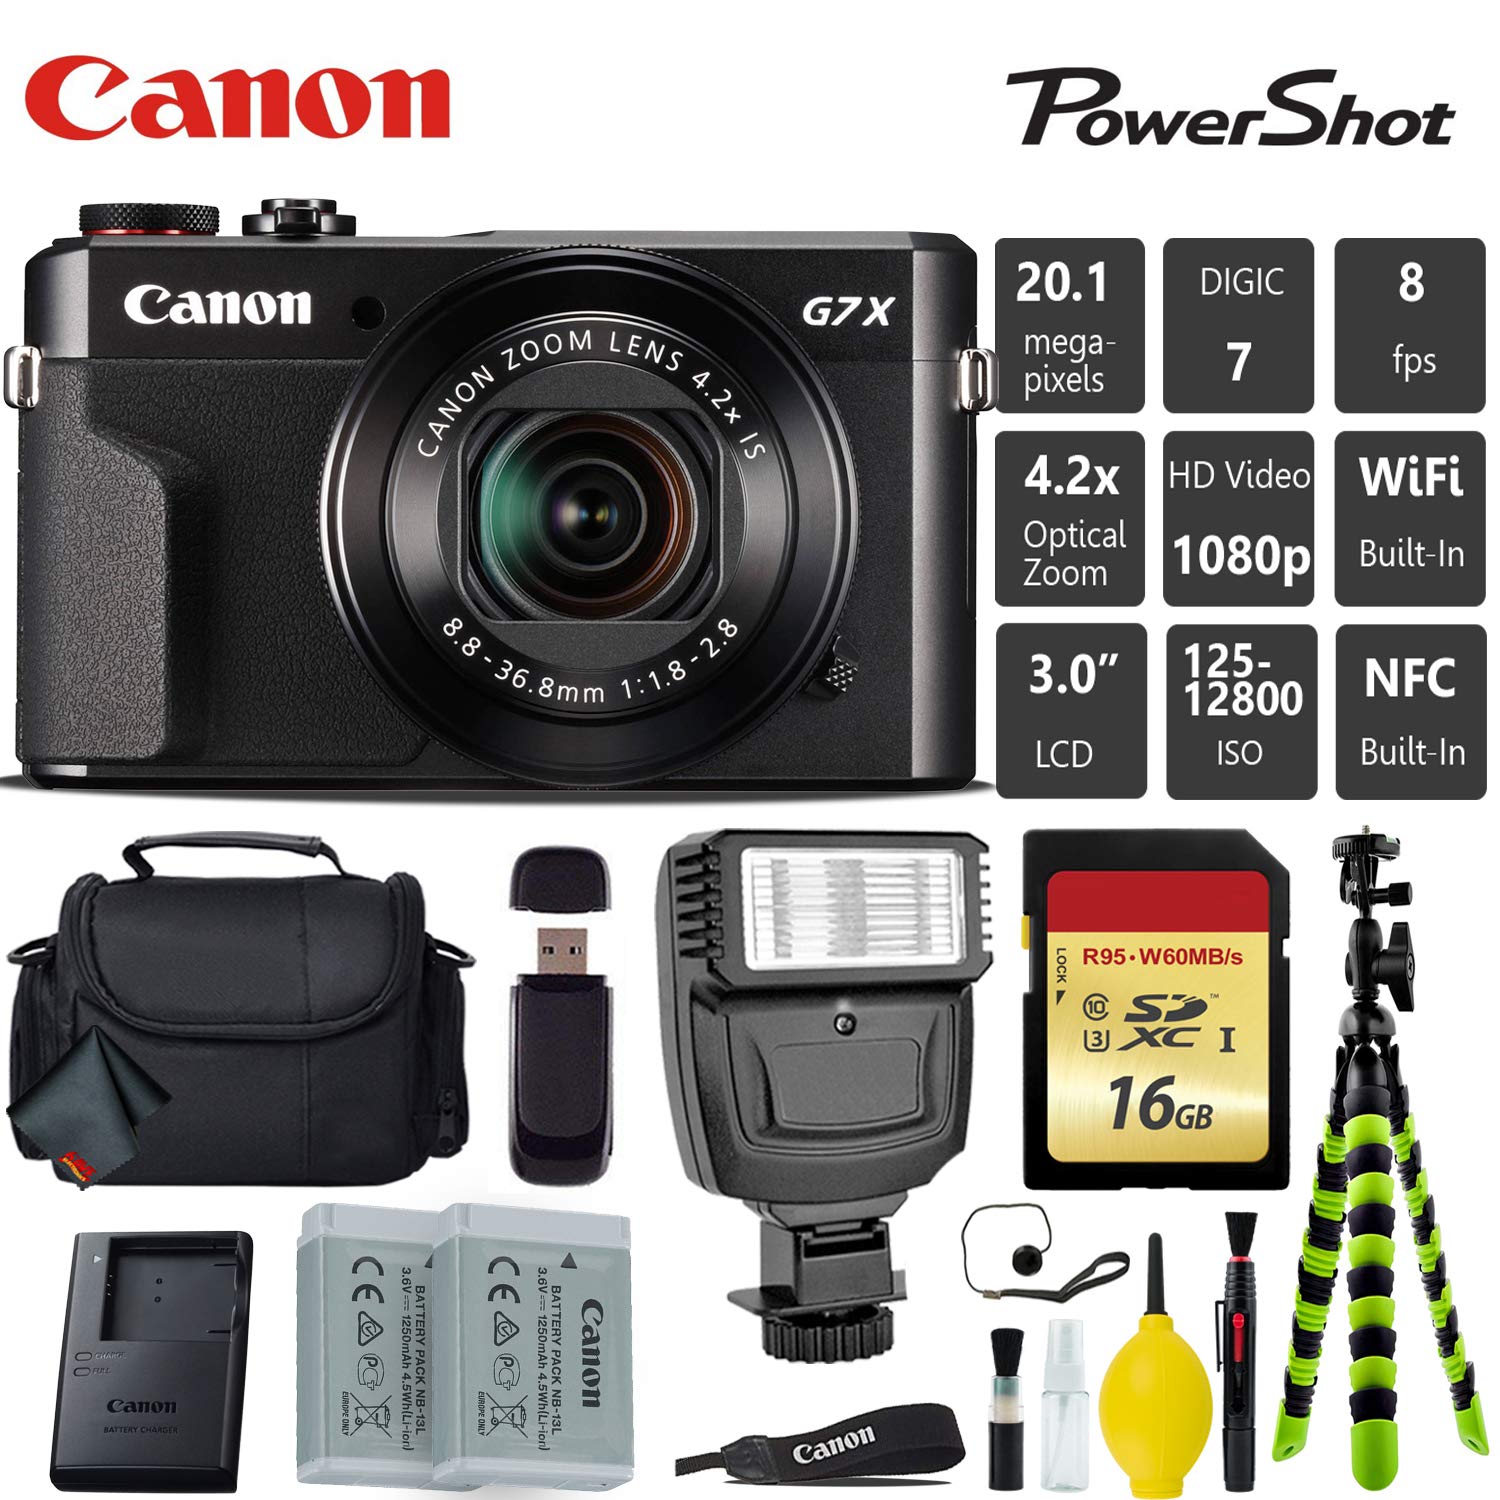 Canon PowerShot G7 X Mark II Point and Shoot Digital Camera + Extra Battery + Digital Flash + Camera Case + 16GB Class 1 Card Starter Bundle